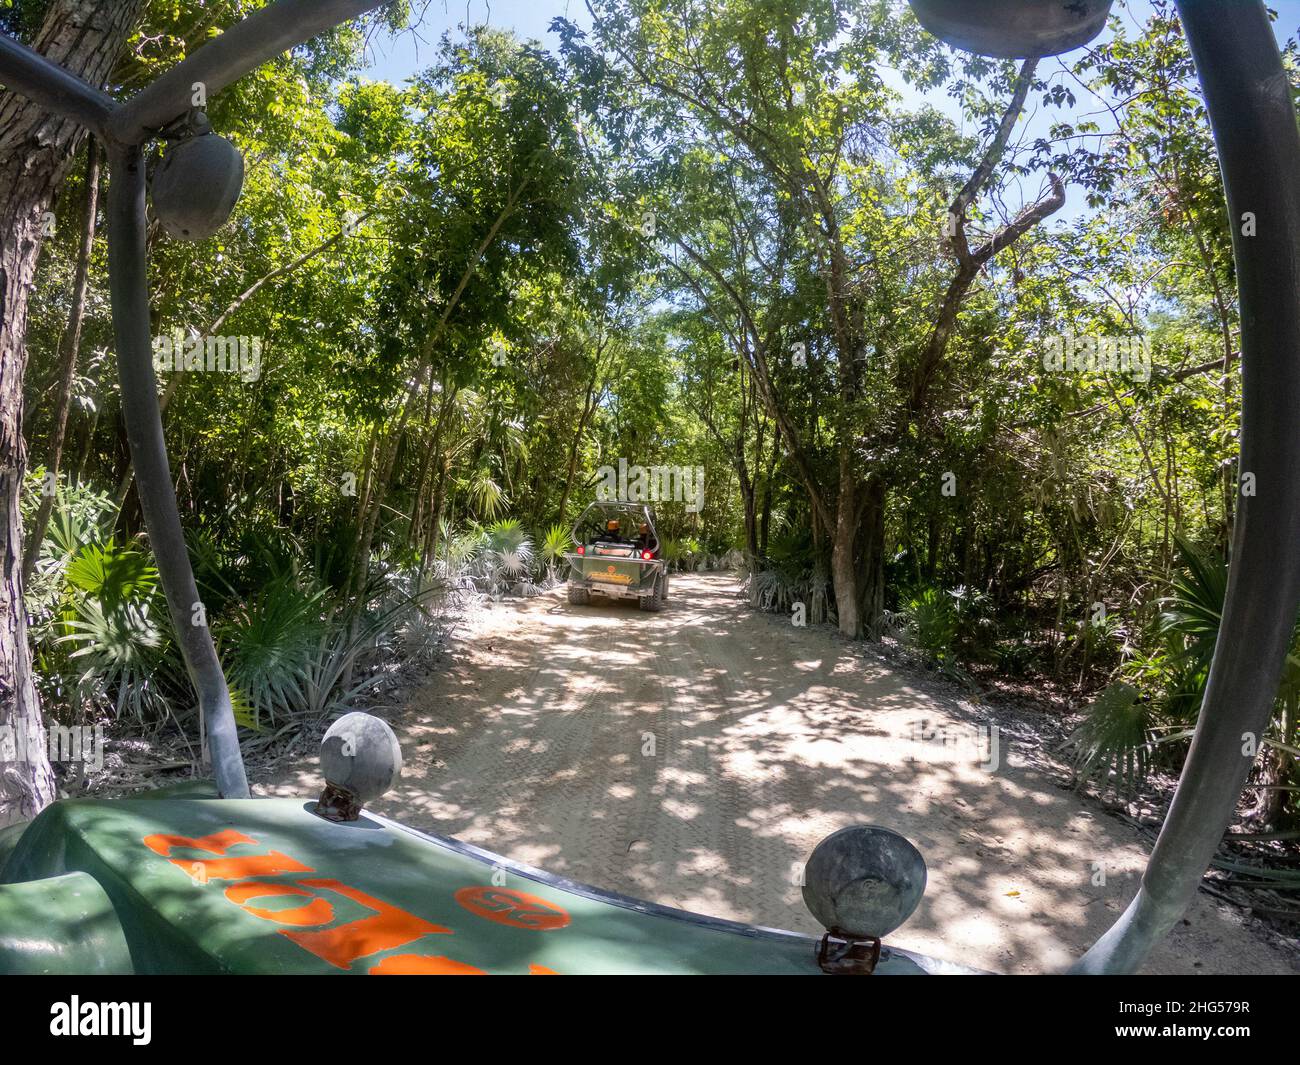 Cancun, Mexiko - 16. September 2021: Xplor Park Amphibienfahrzeuge. Xplor ist ein Abenteuerpark an der Riviera Maya Stockfoto